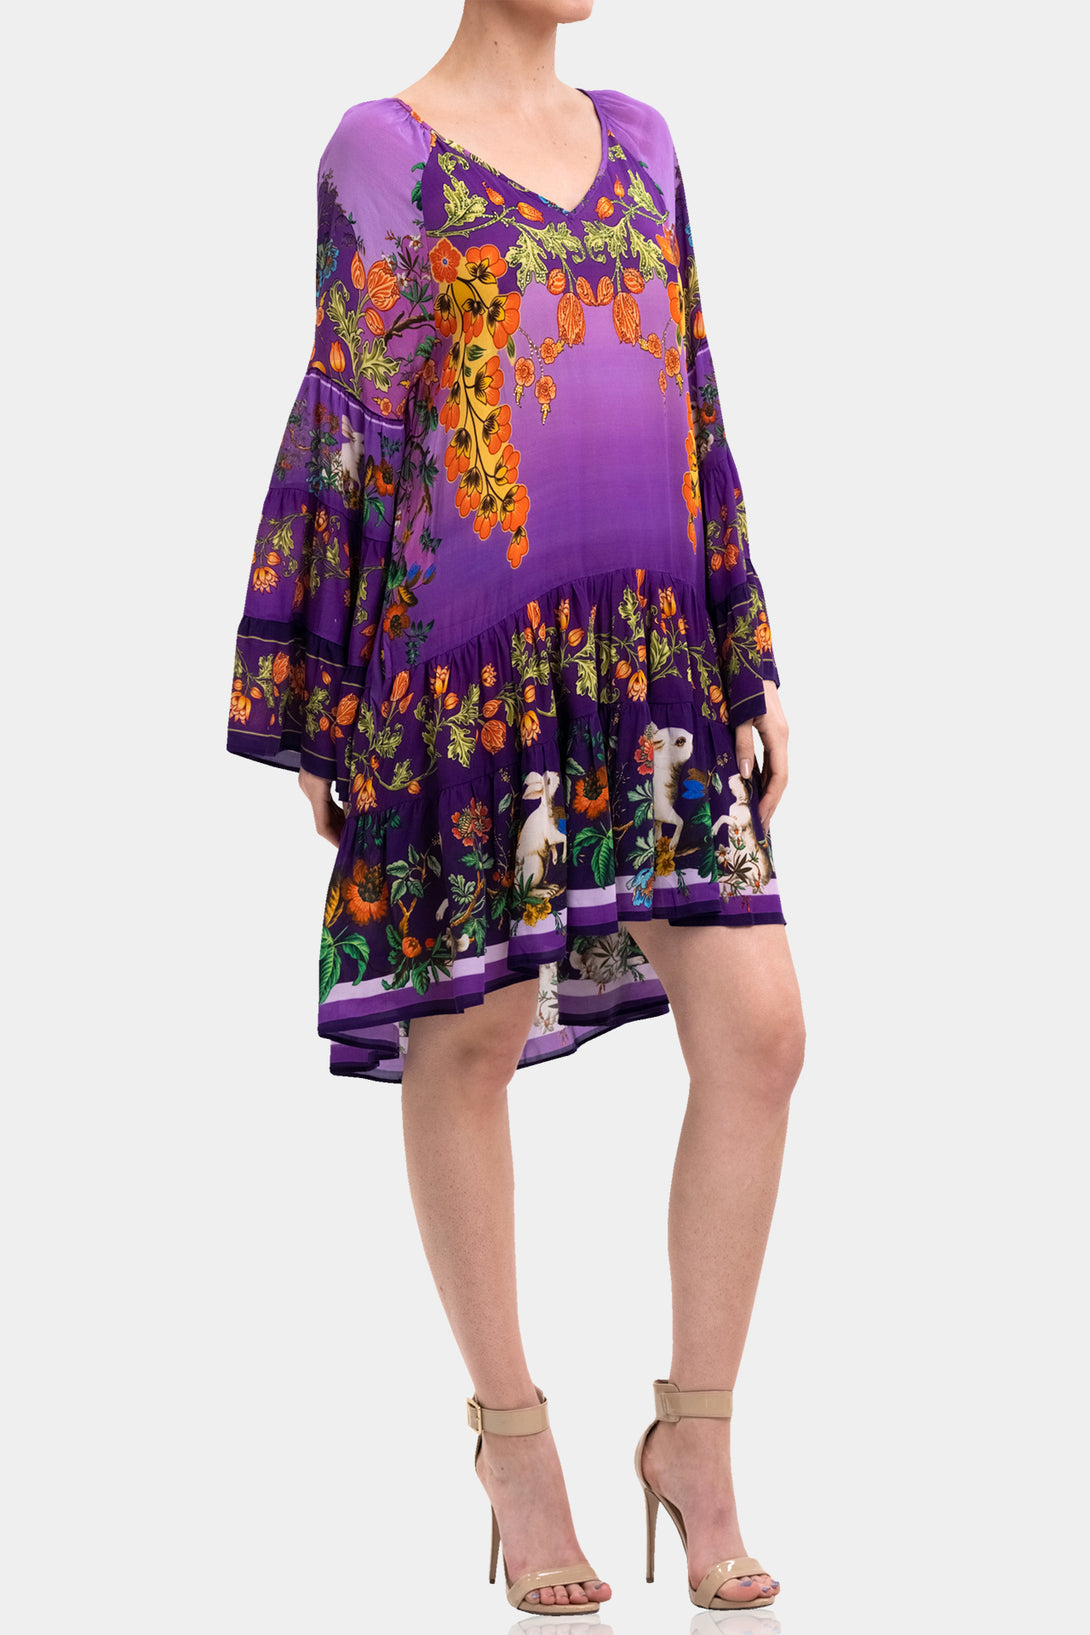  satin purple mini dress, Shahida Parides, sleeveless short dress, short frock for women party wear,